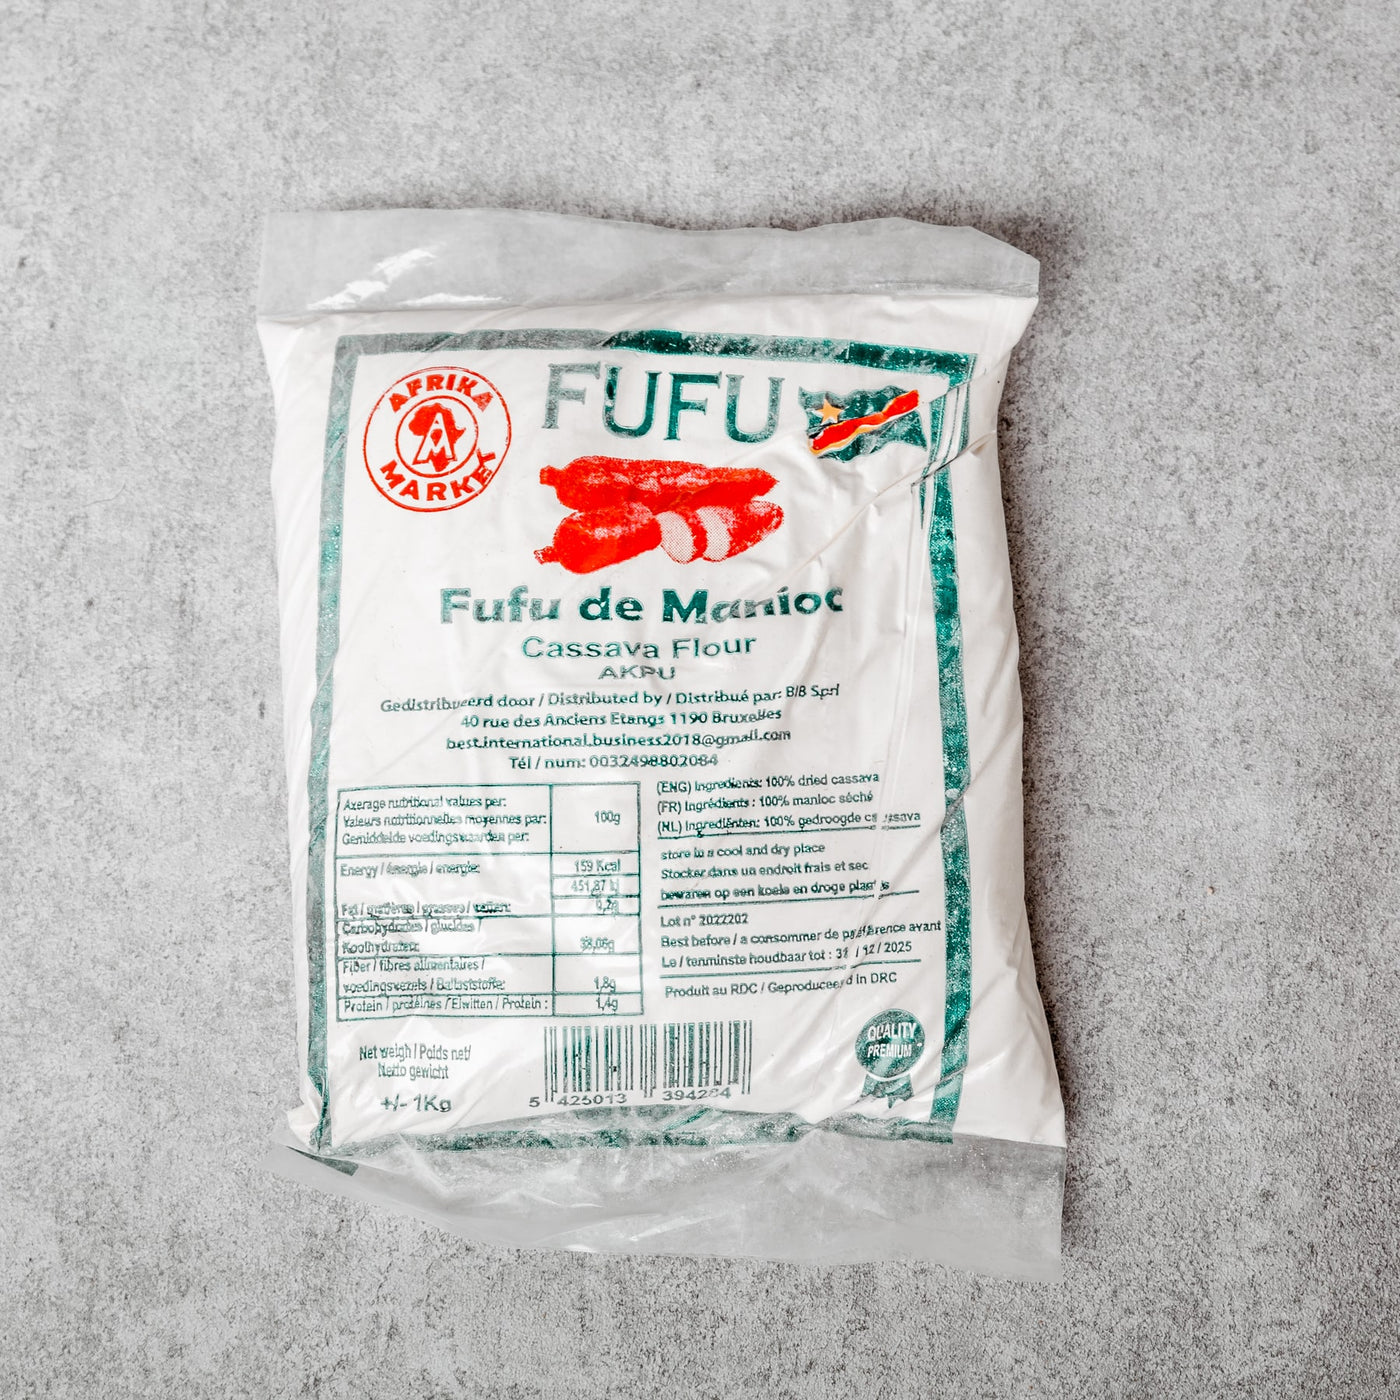 Fufu de Manioc - Akpu from Kongo